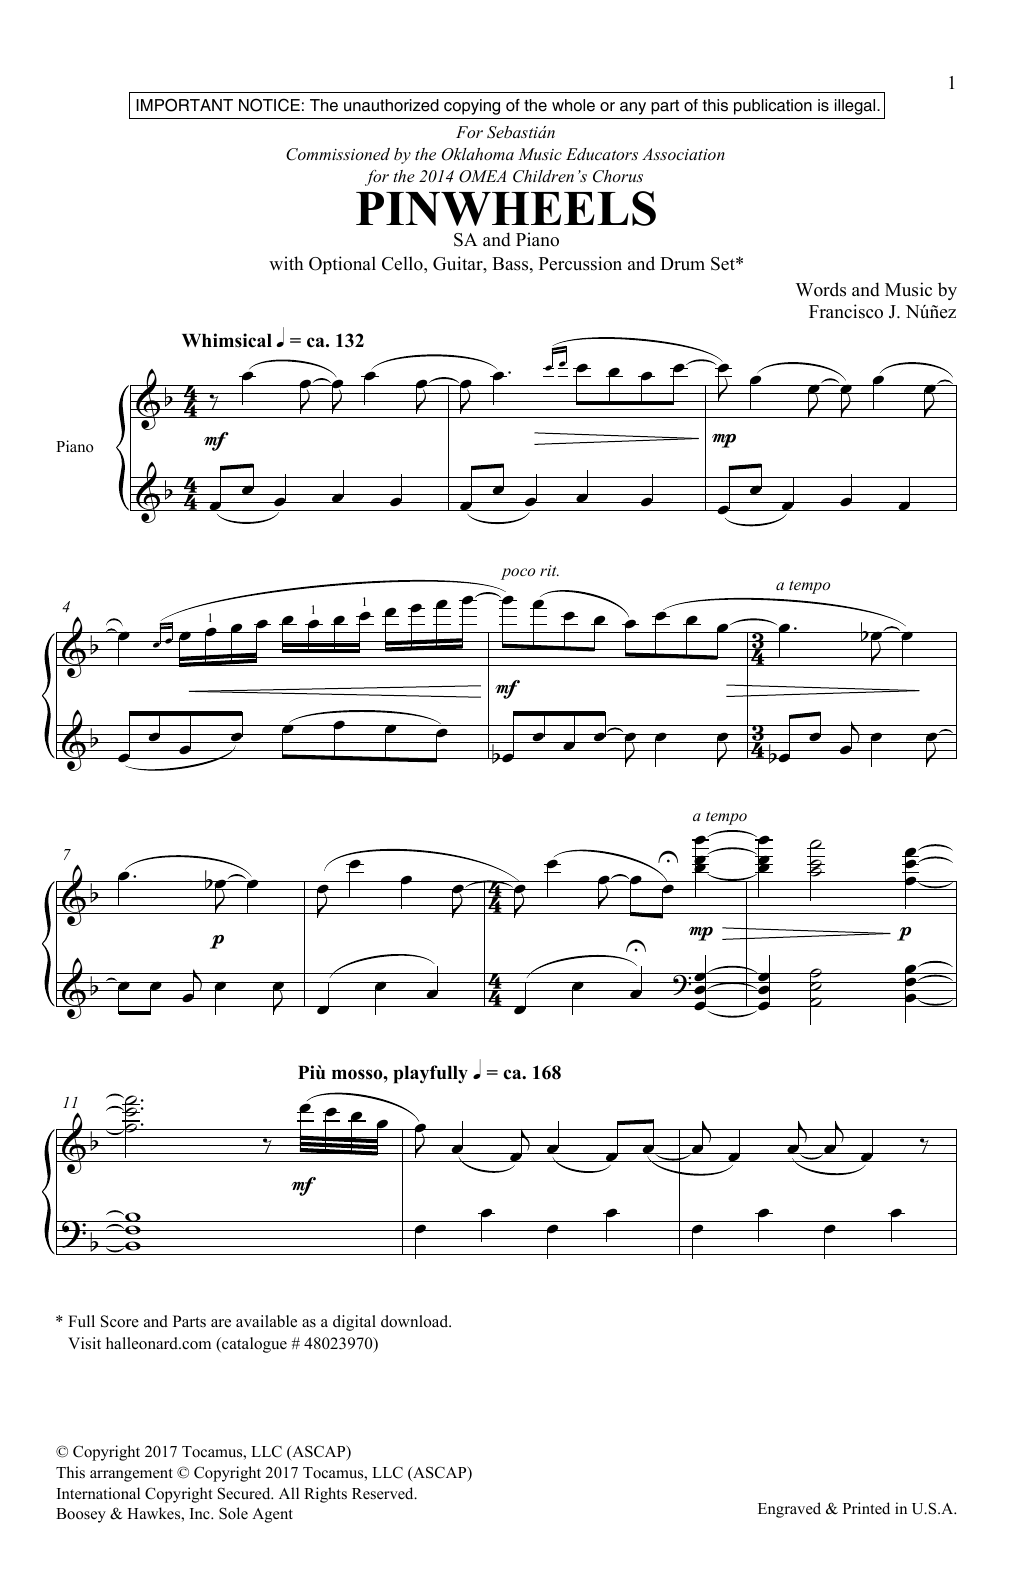 Francisco Nunez Pinwheels Sheet Music Notes & Chords for 2-Part Choir - Download or Print PDF